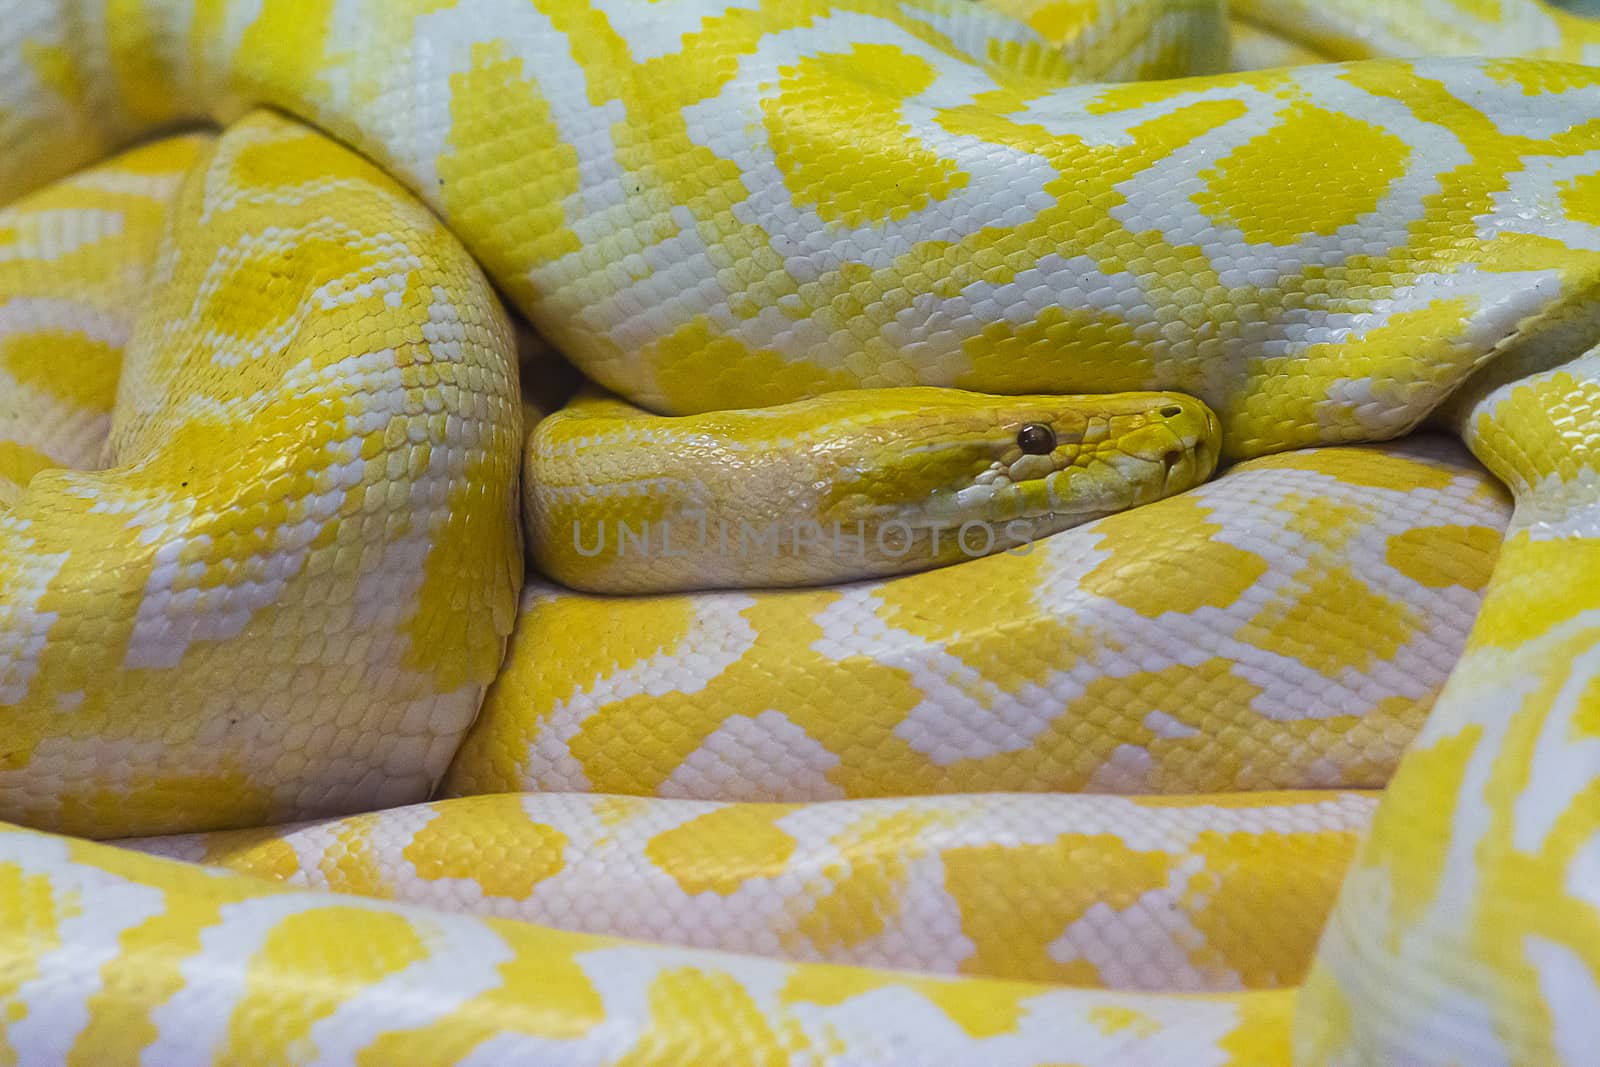 snake huge by cedicocinovo